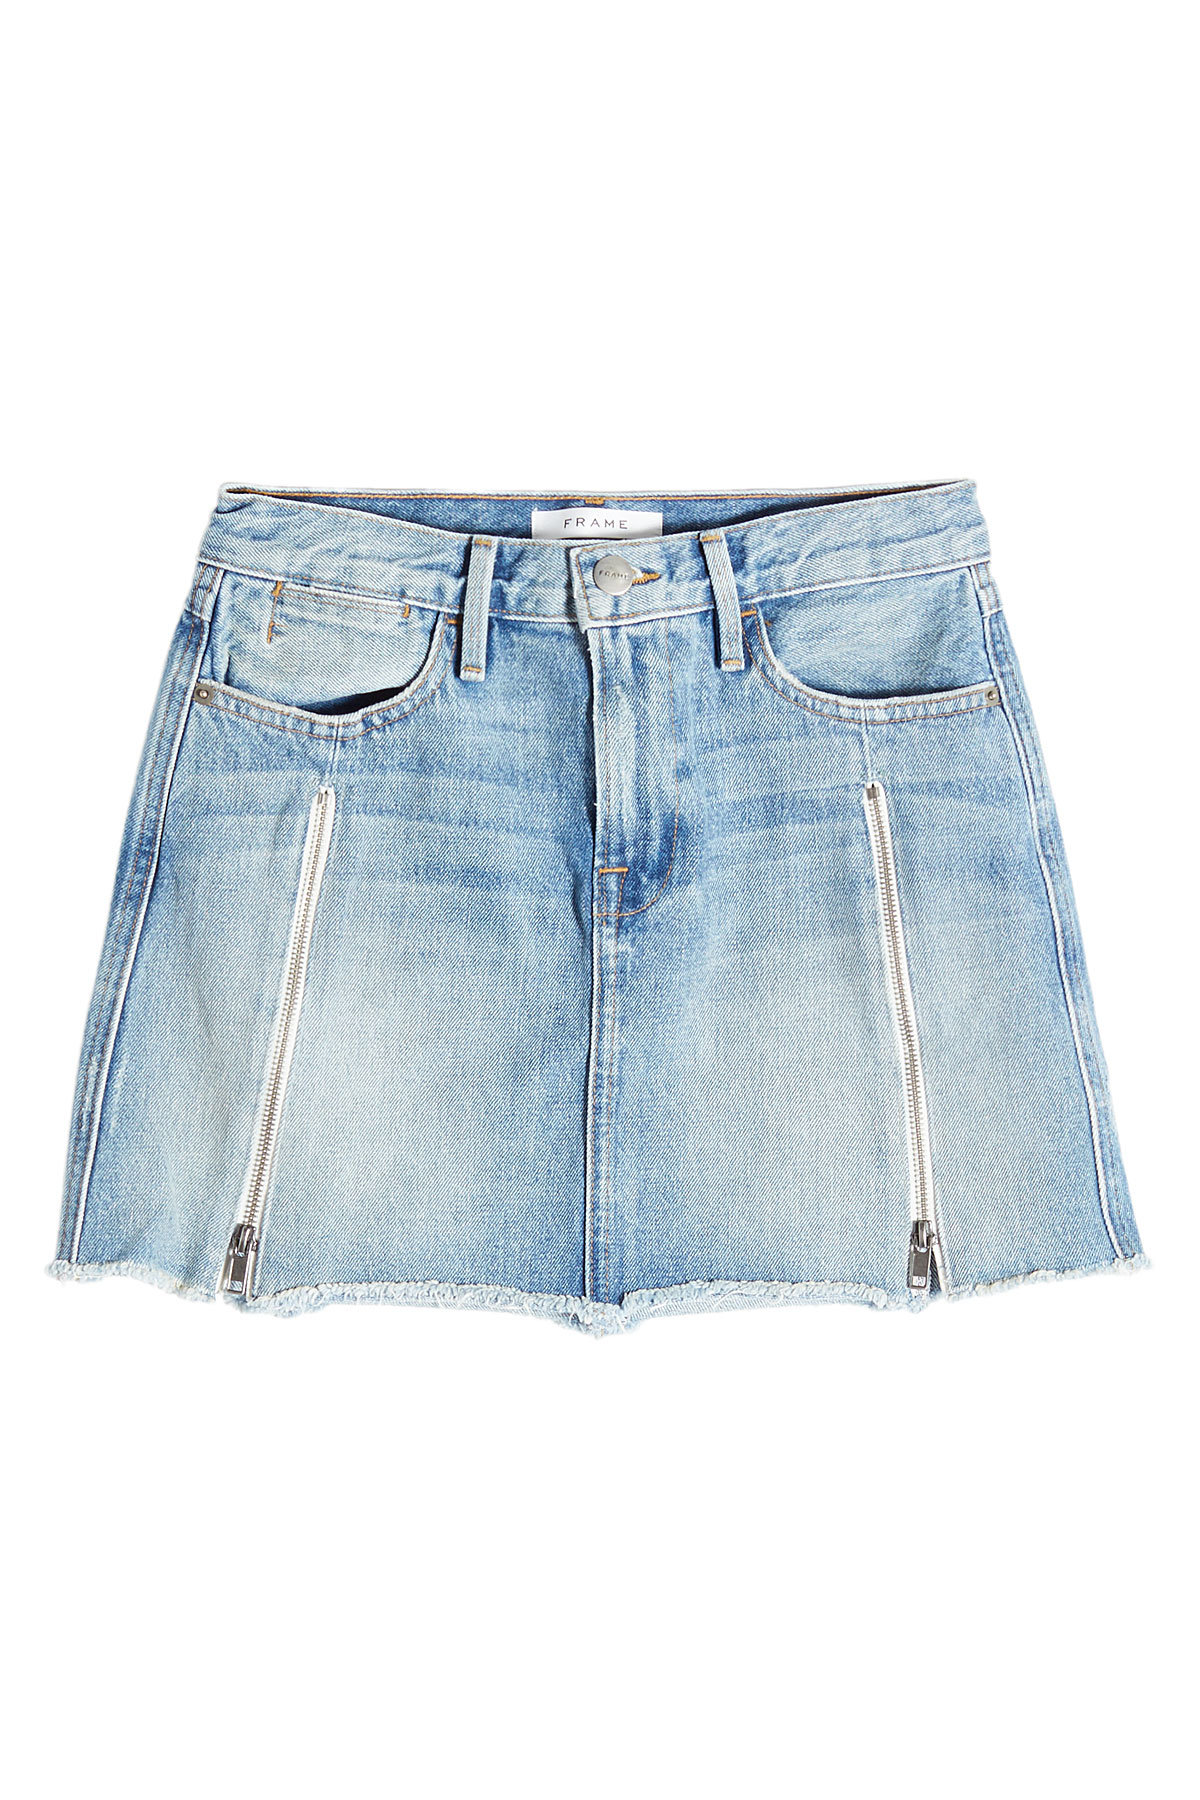 Frame Denim - Denim Mini Skirt with Zippers